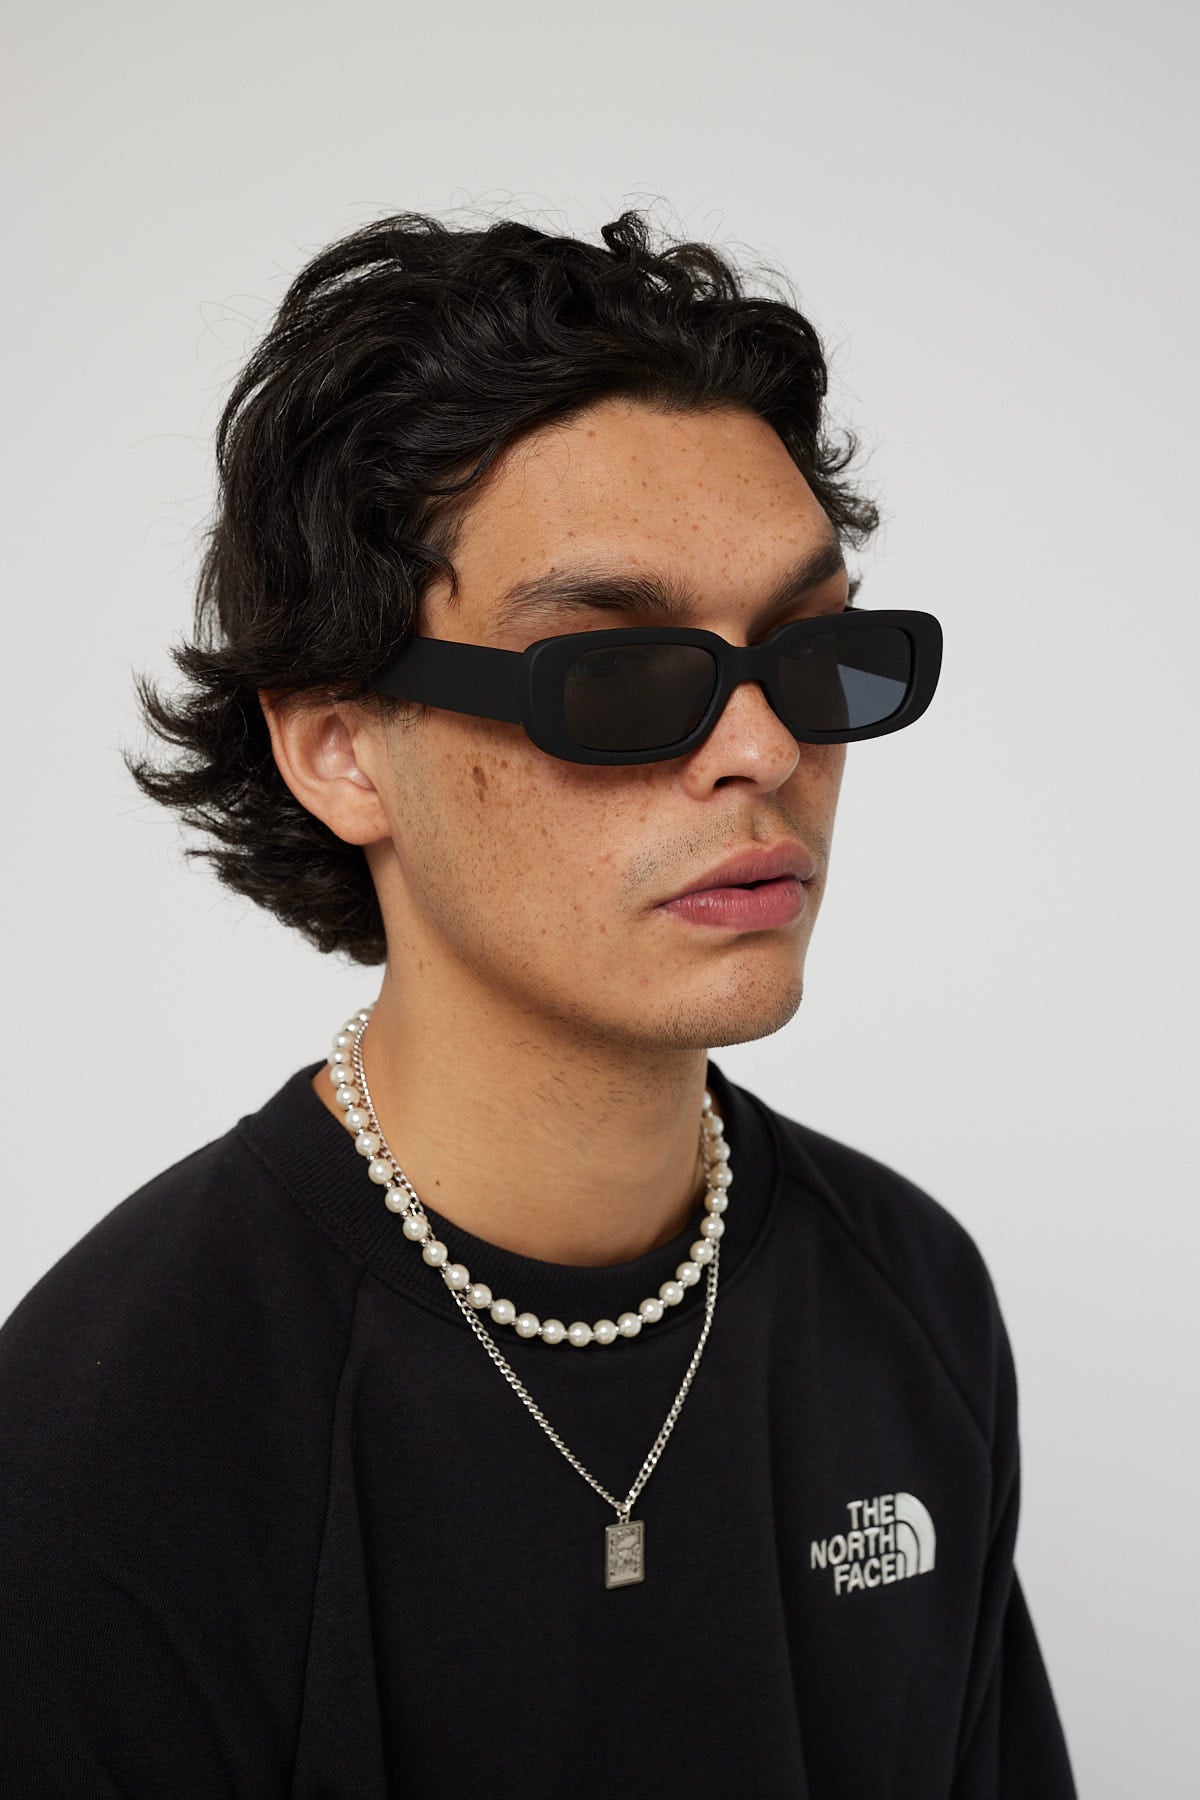 Reality Eyewear X-ray Specs Matte Black